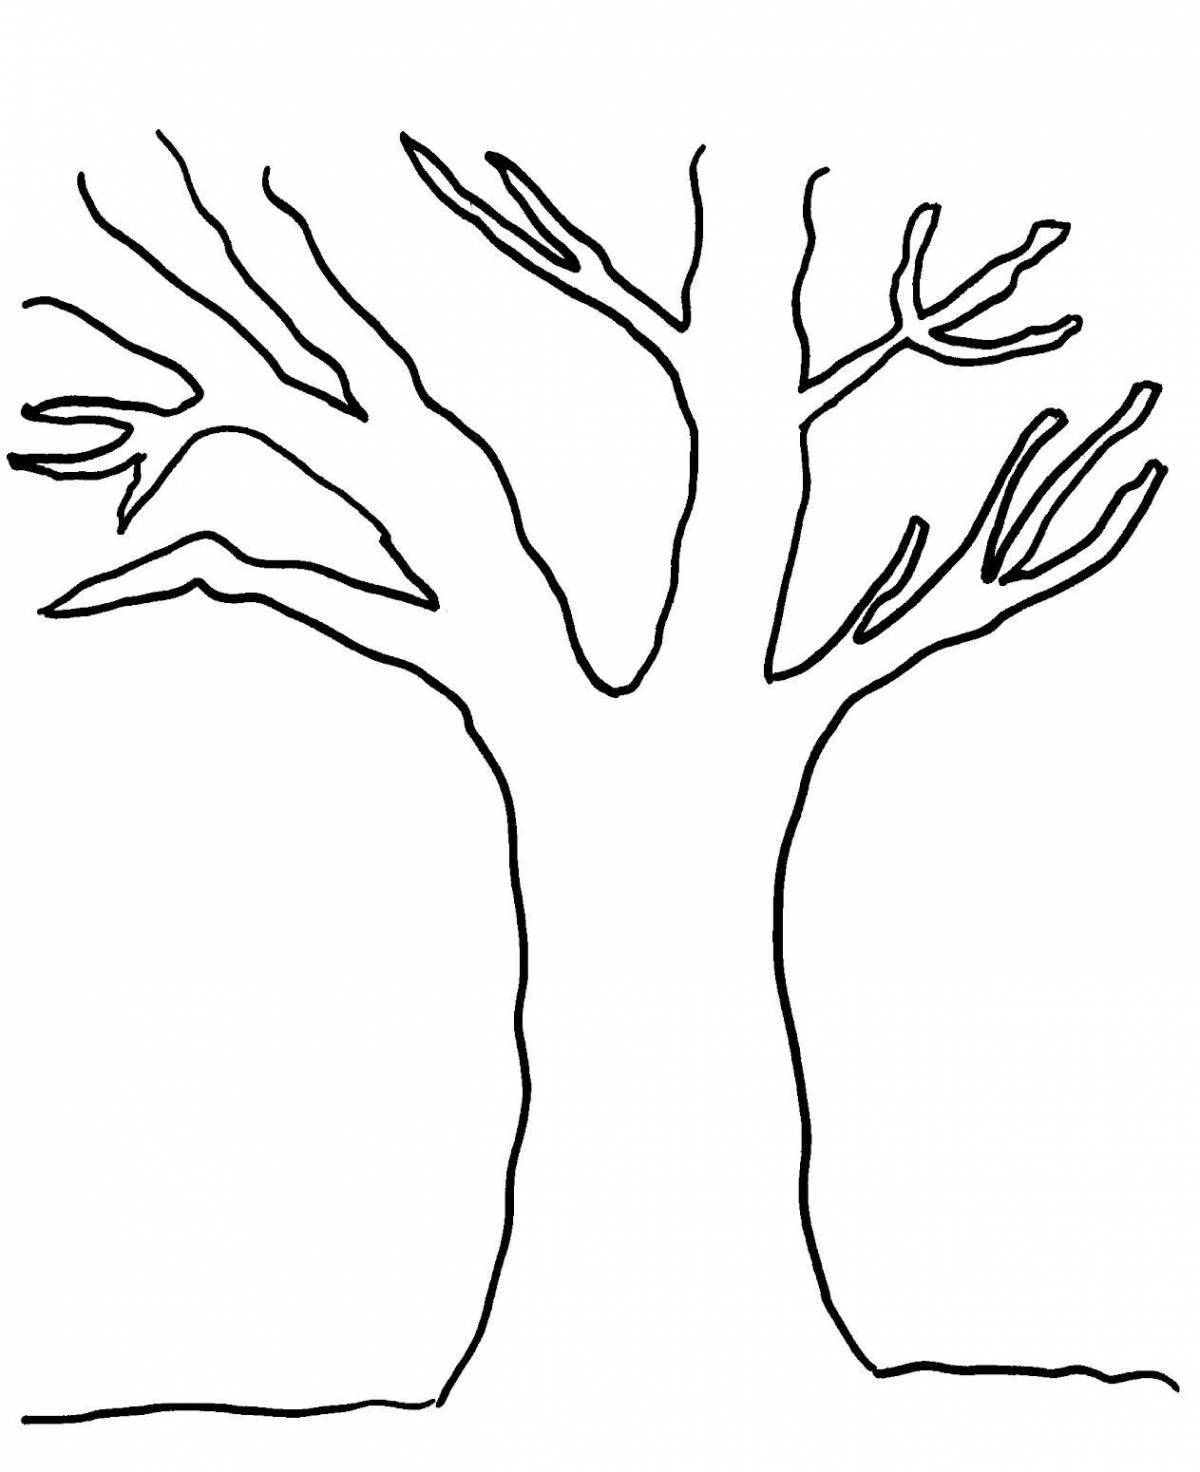 Children's tree trunk #1